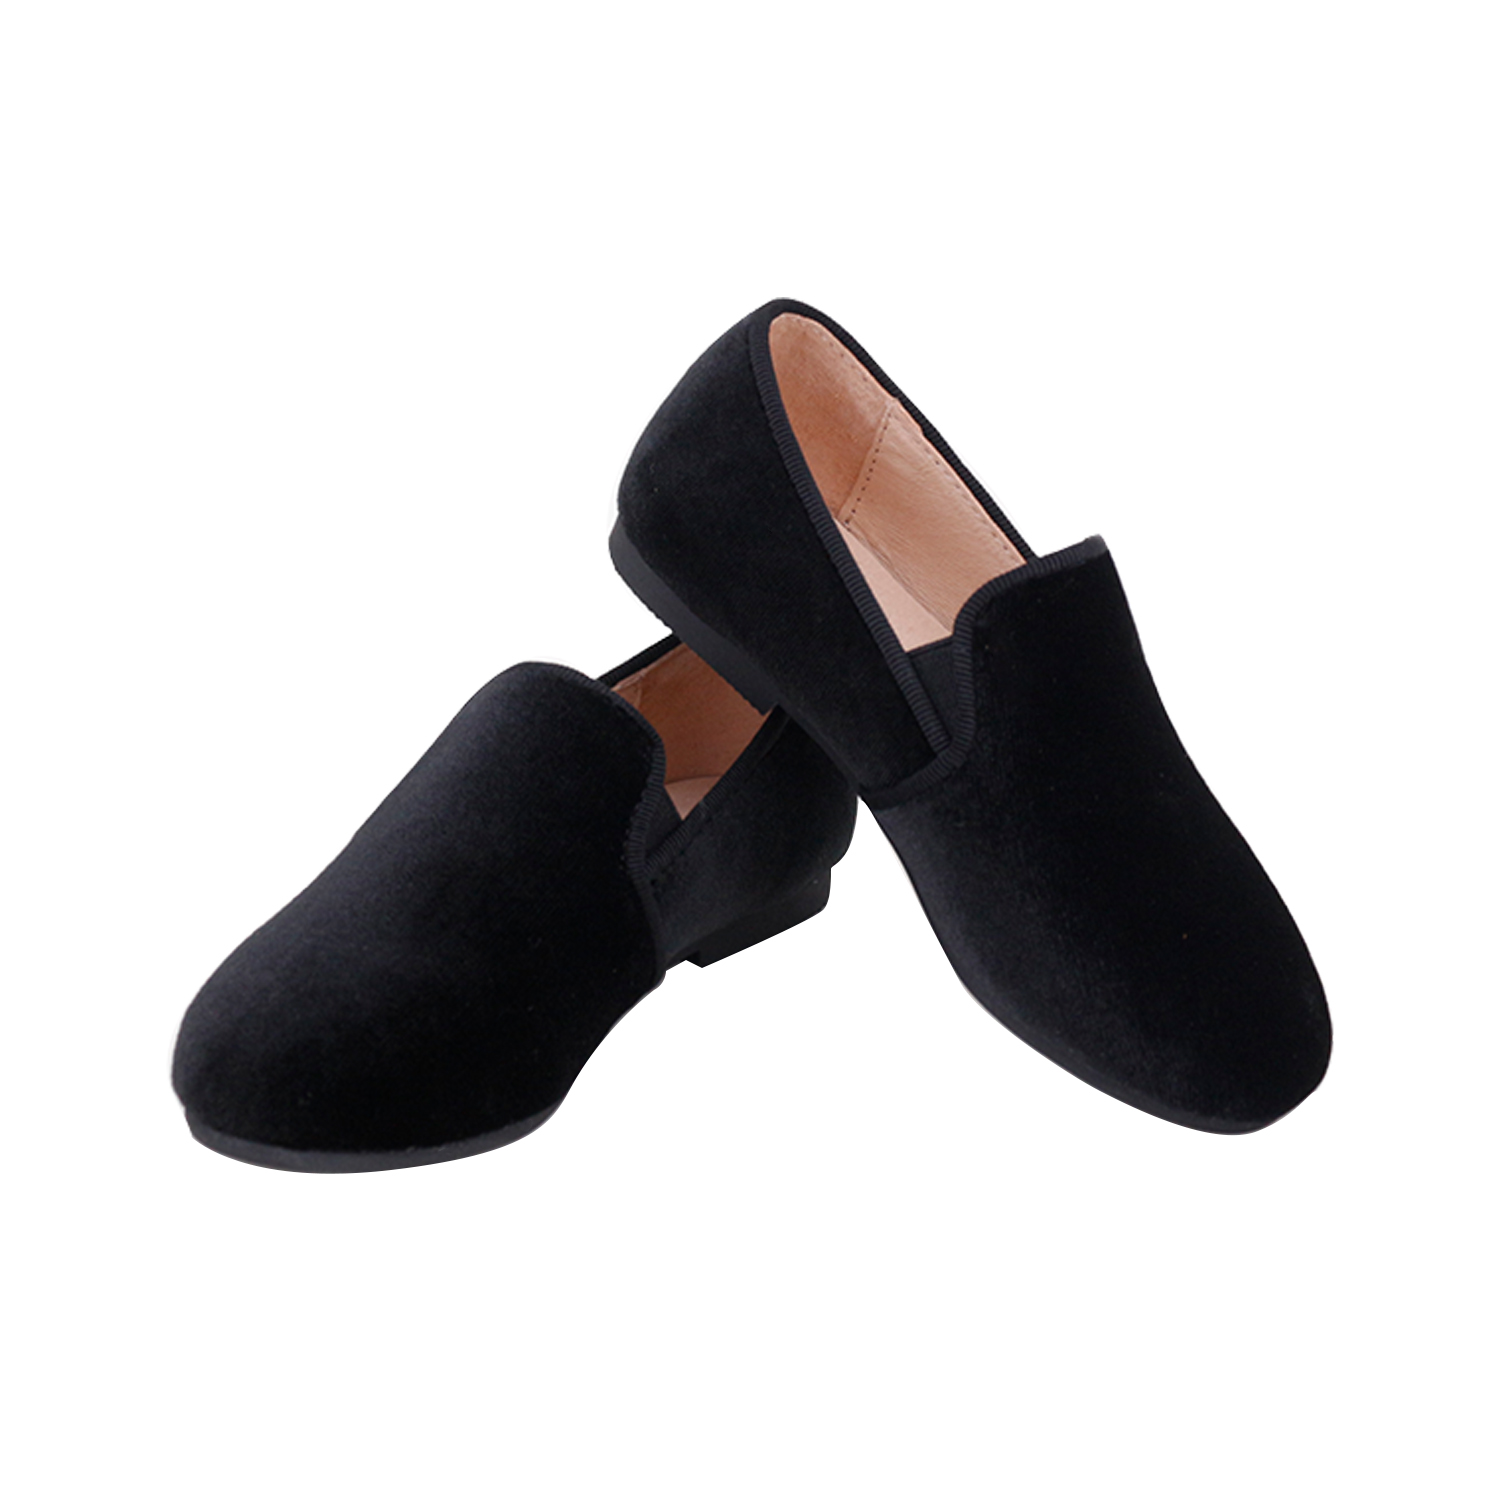 Smoking Shoe Black Velvet - Perroquet Shoes